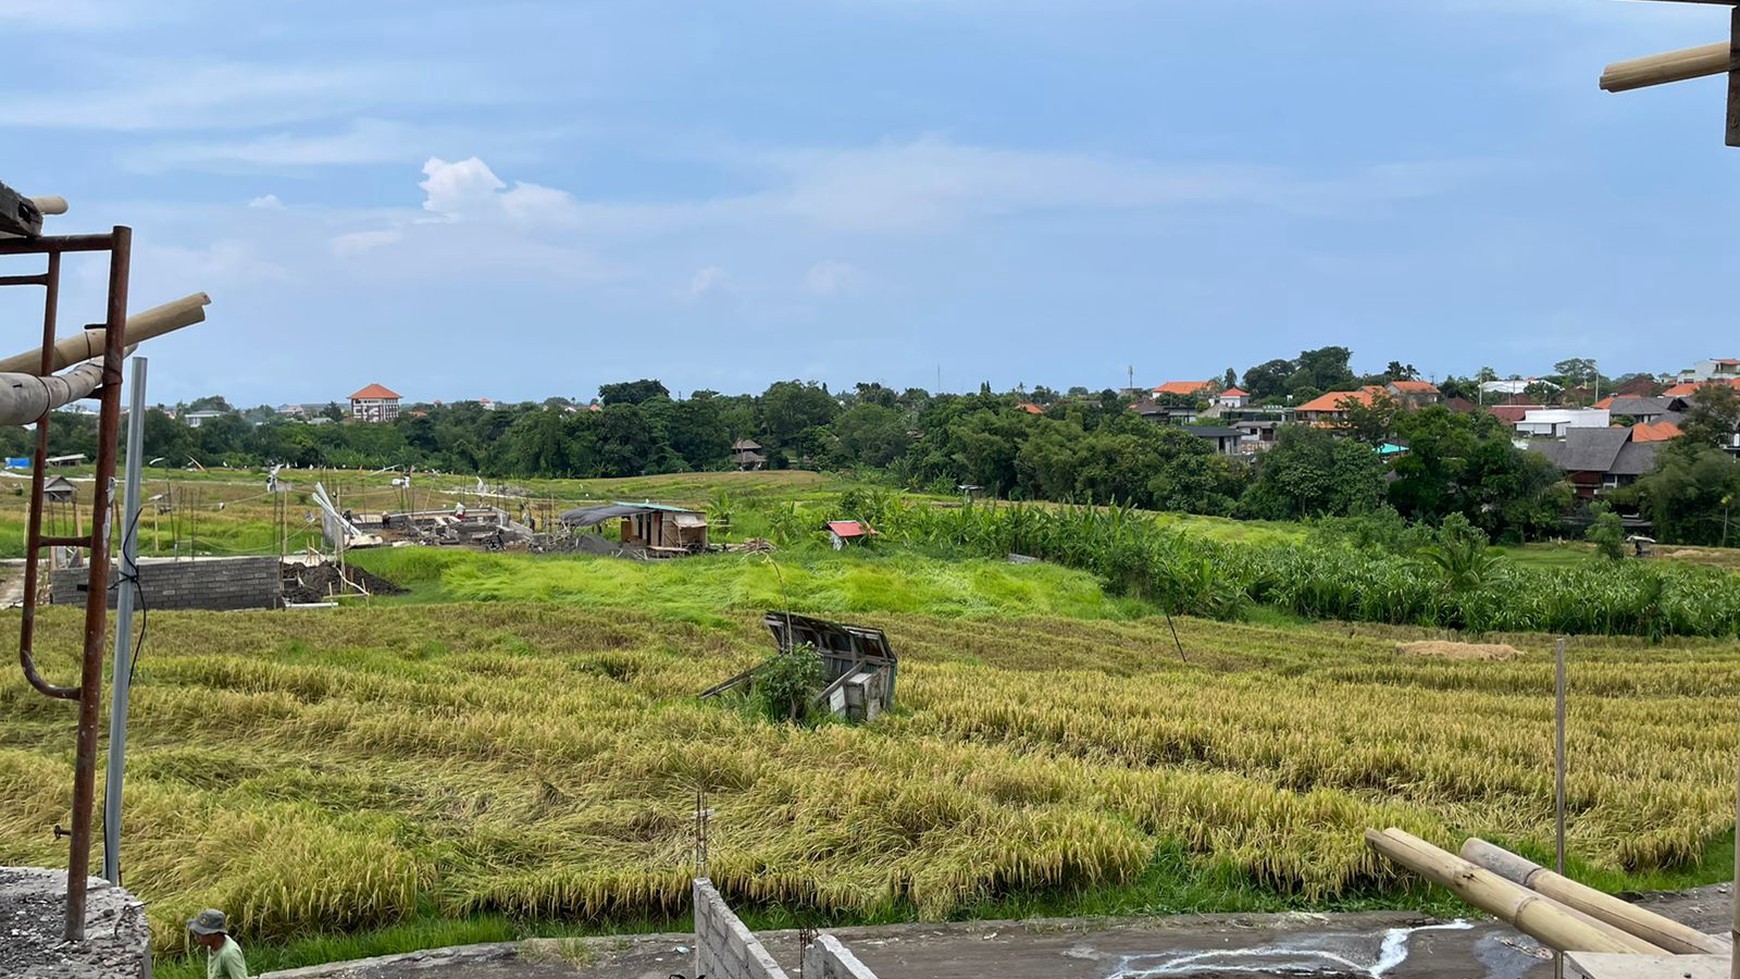 3 bedroom villa with rice field views